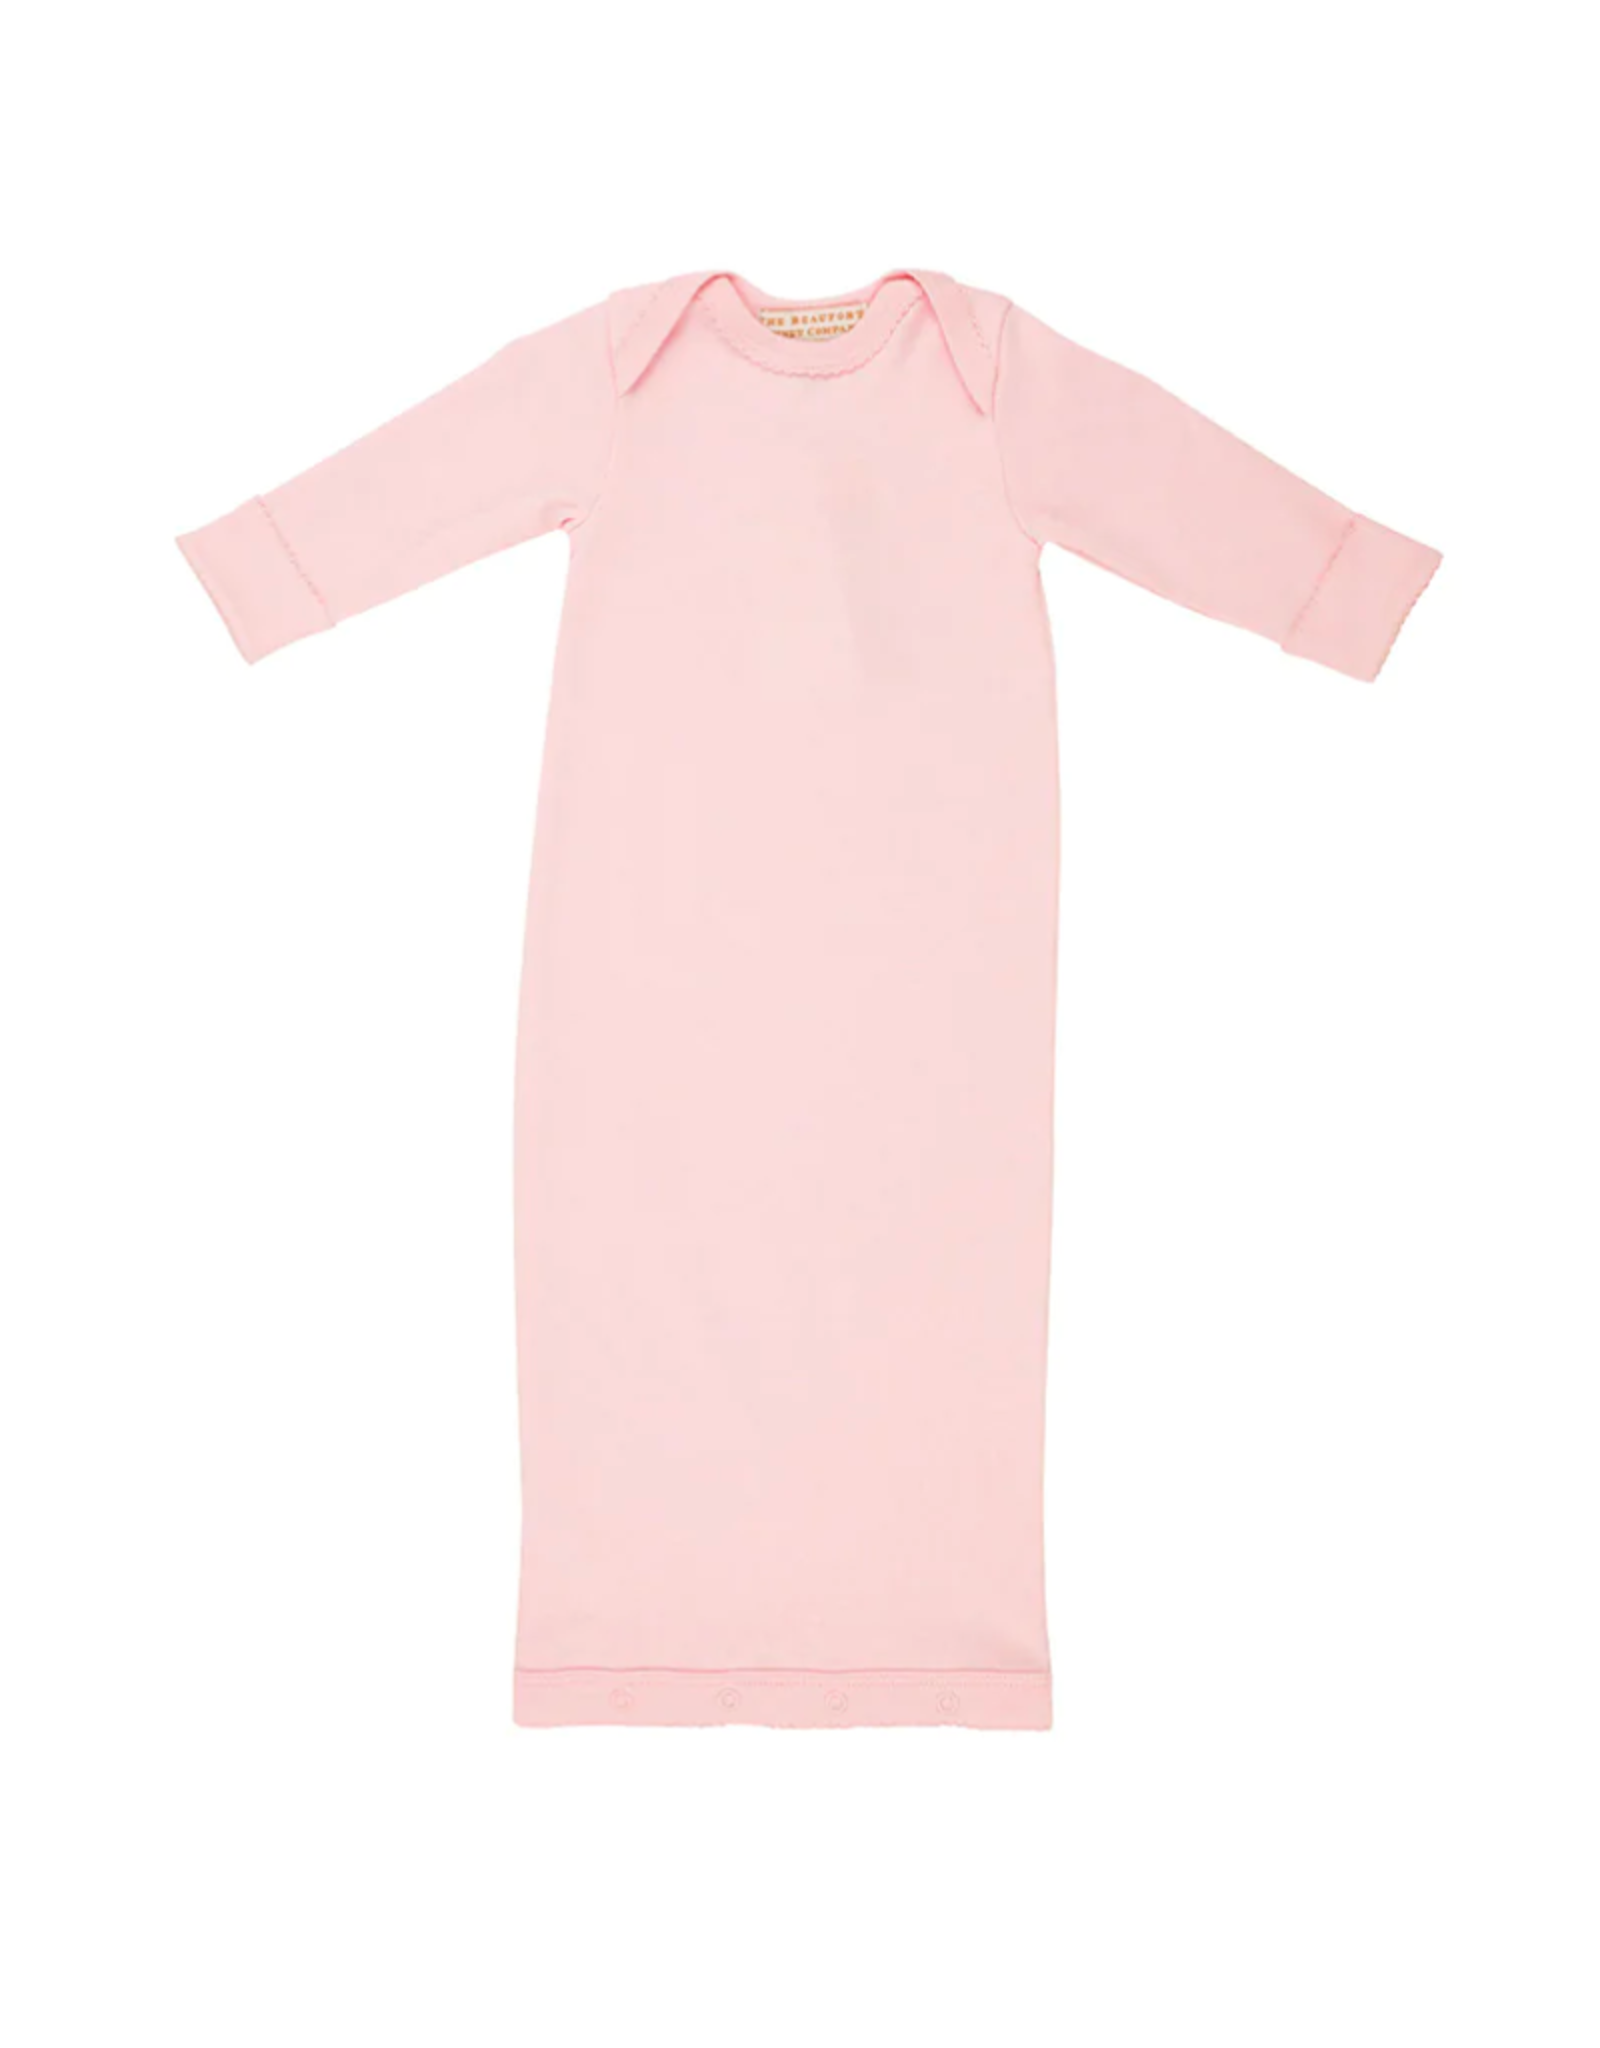 The Beaufort Bonnet Company Sadler Sack Gown Palm Beach Pink 0/3m